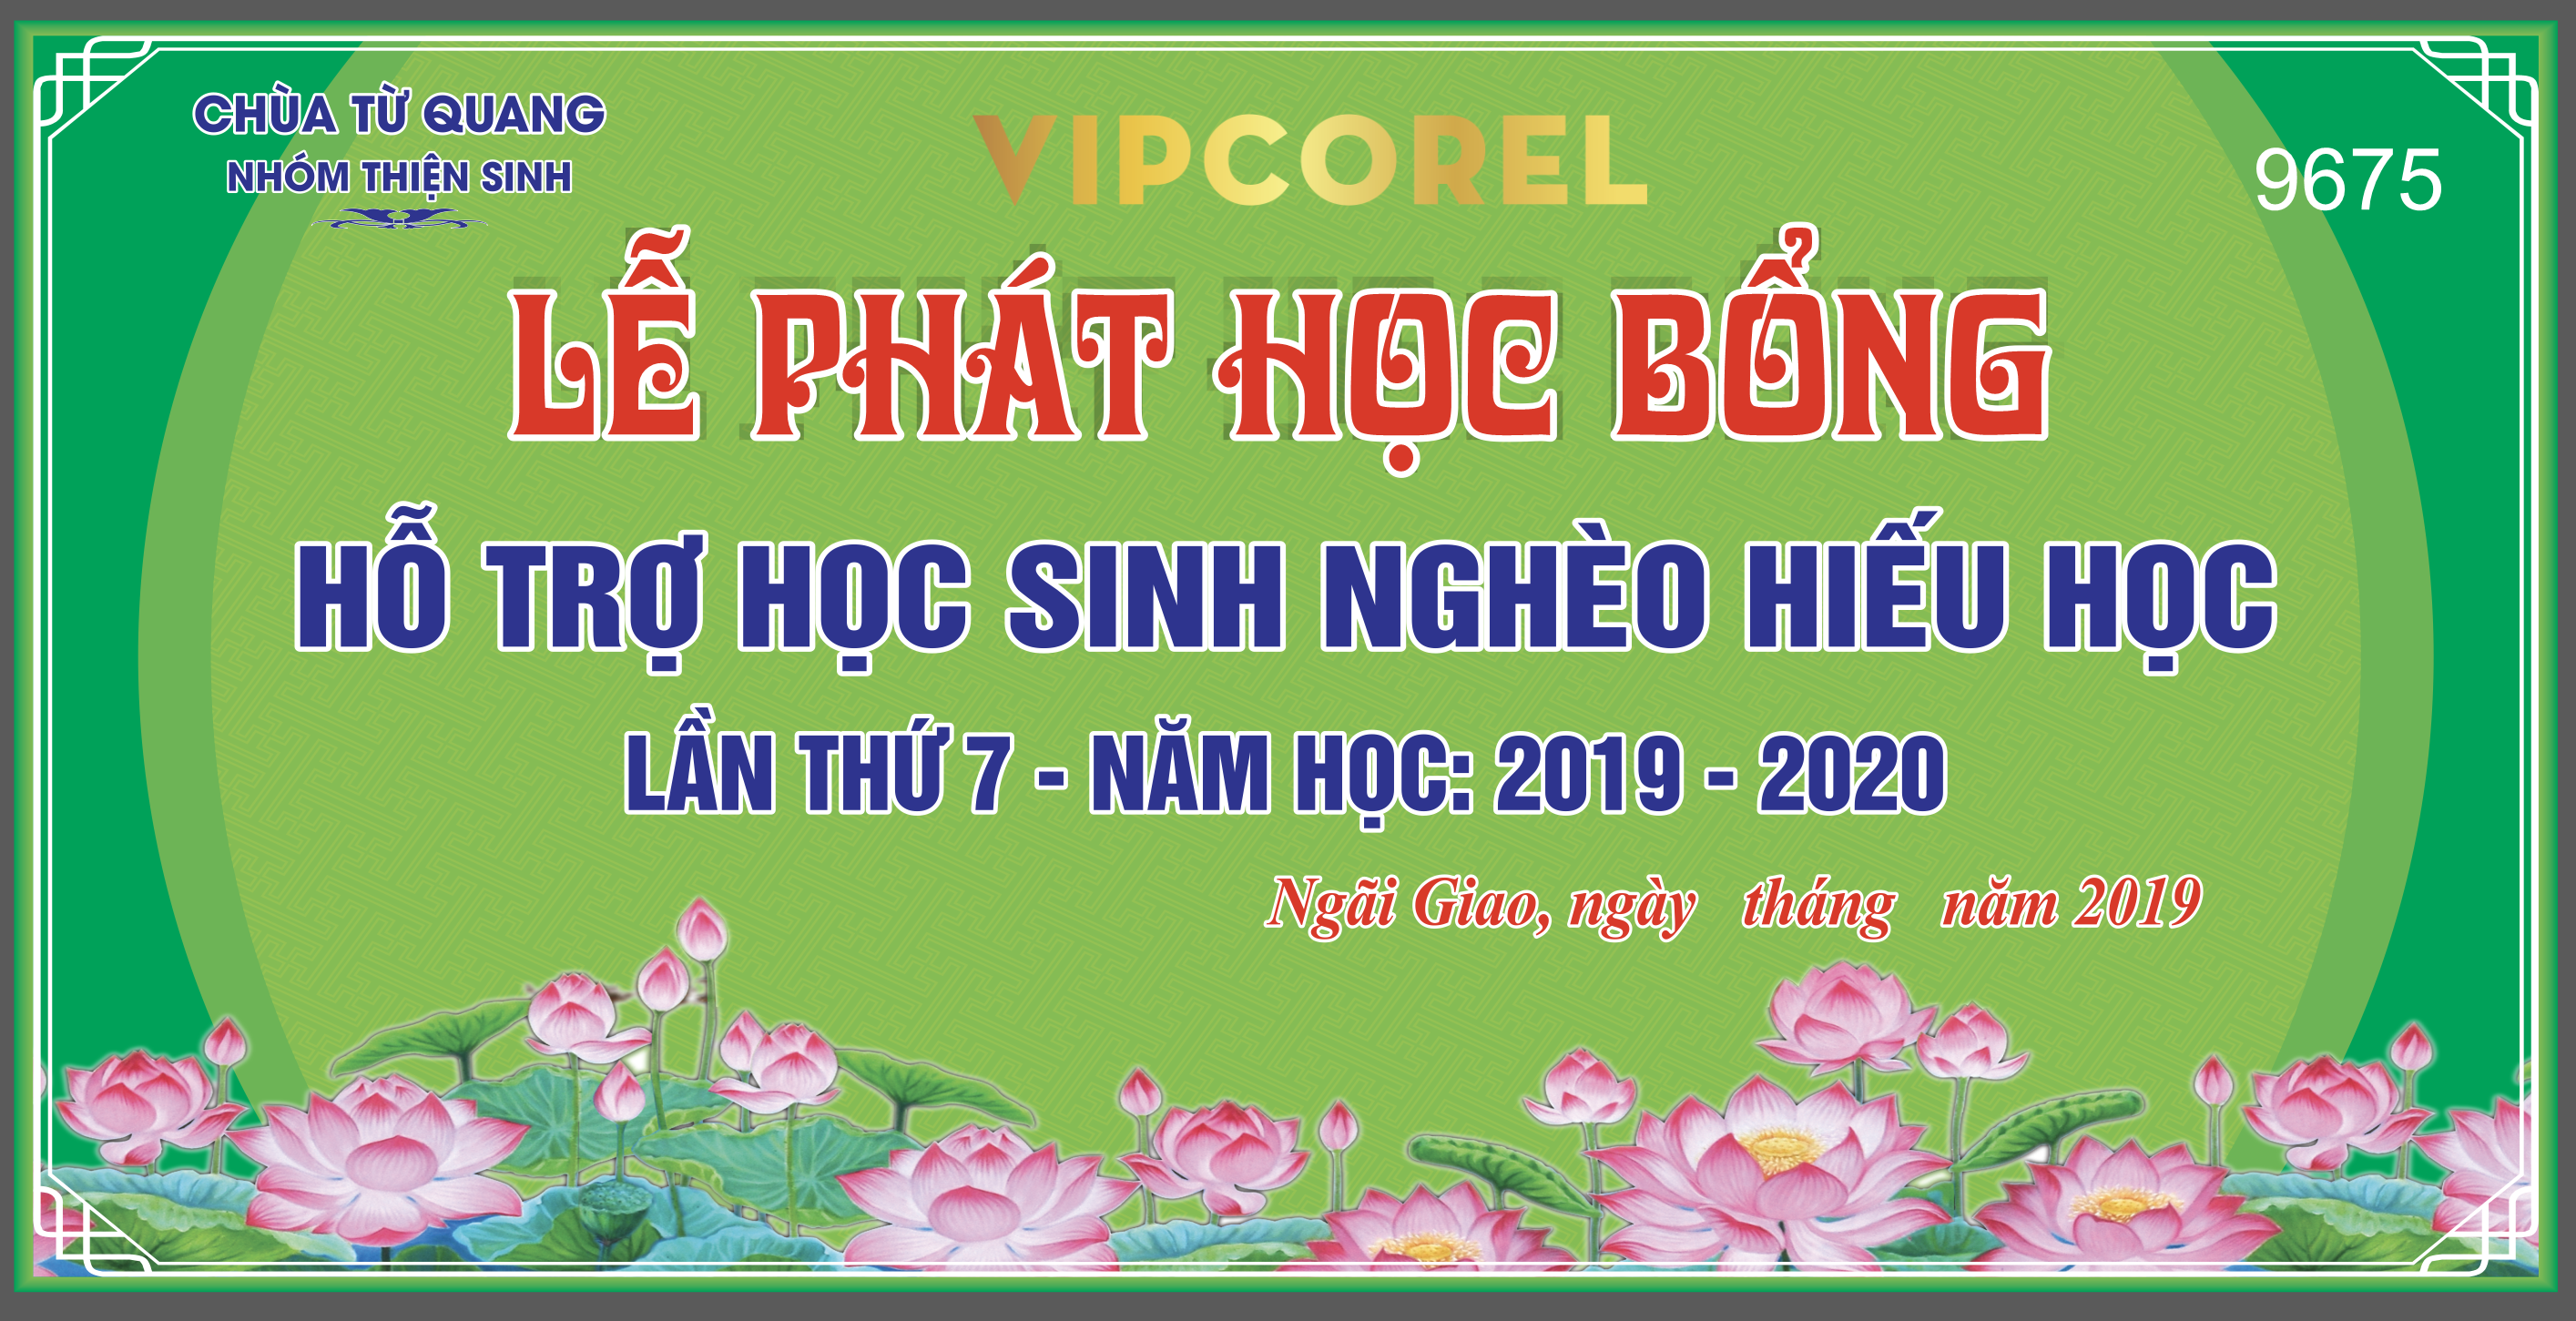 le phat hoc bong ho tro hoc sinh ngheo hieu hoc.png